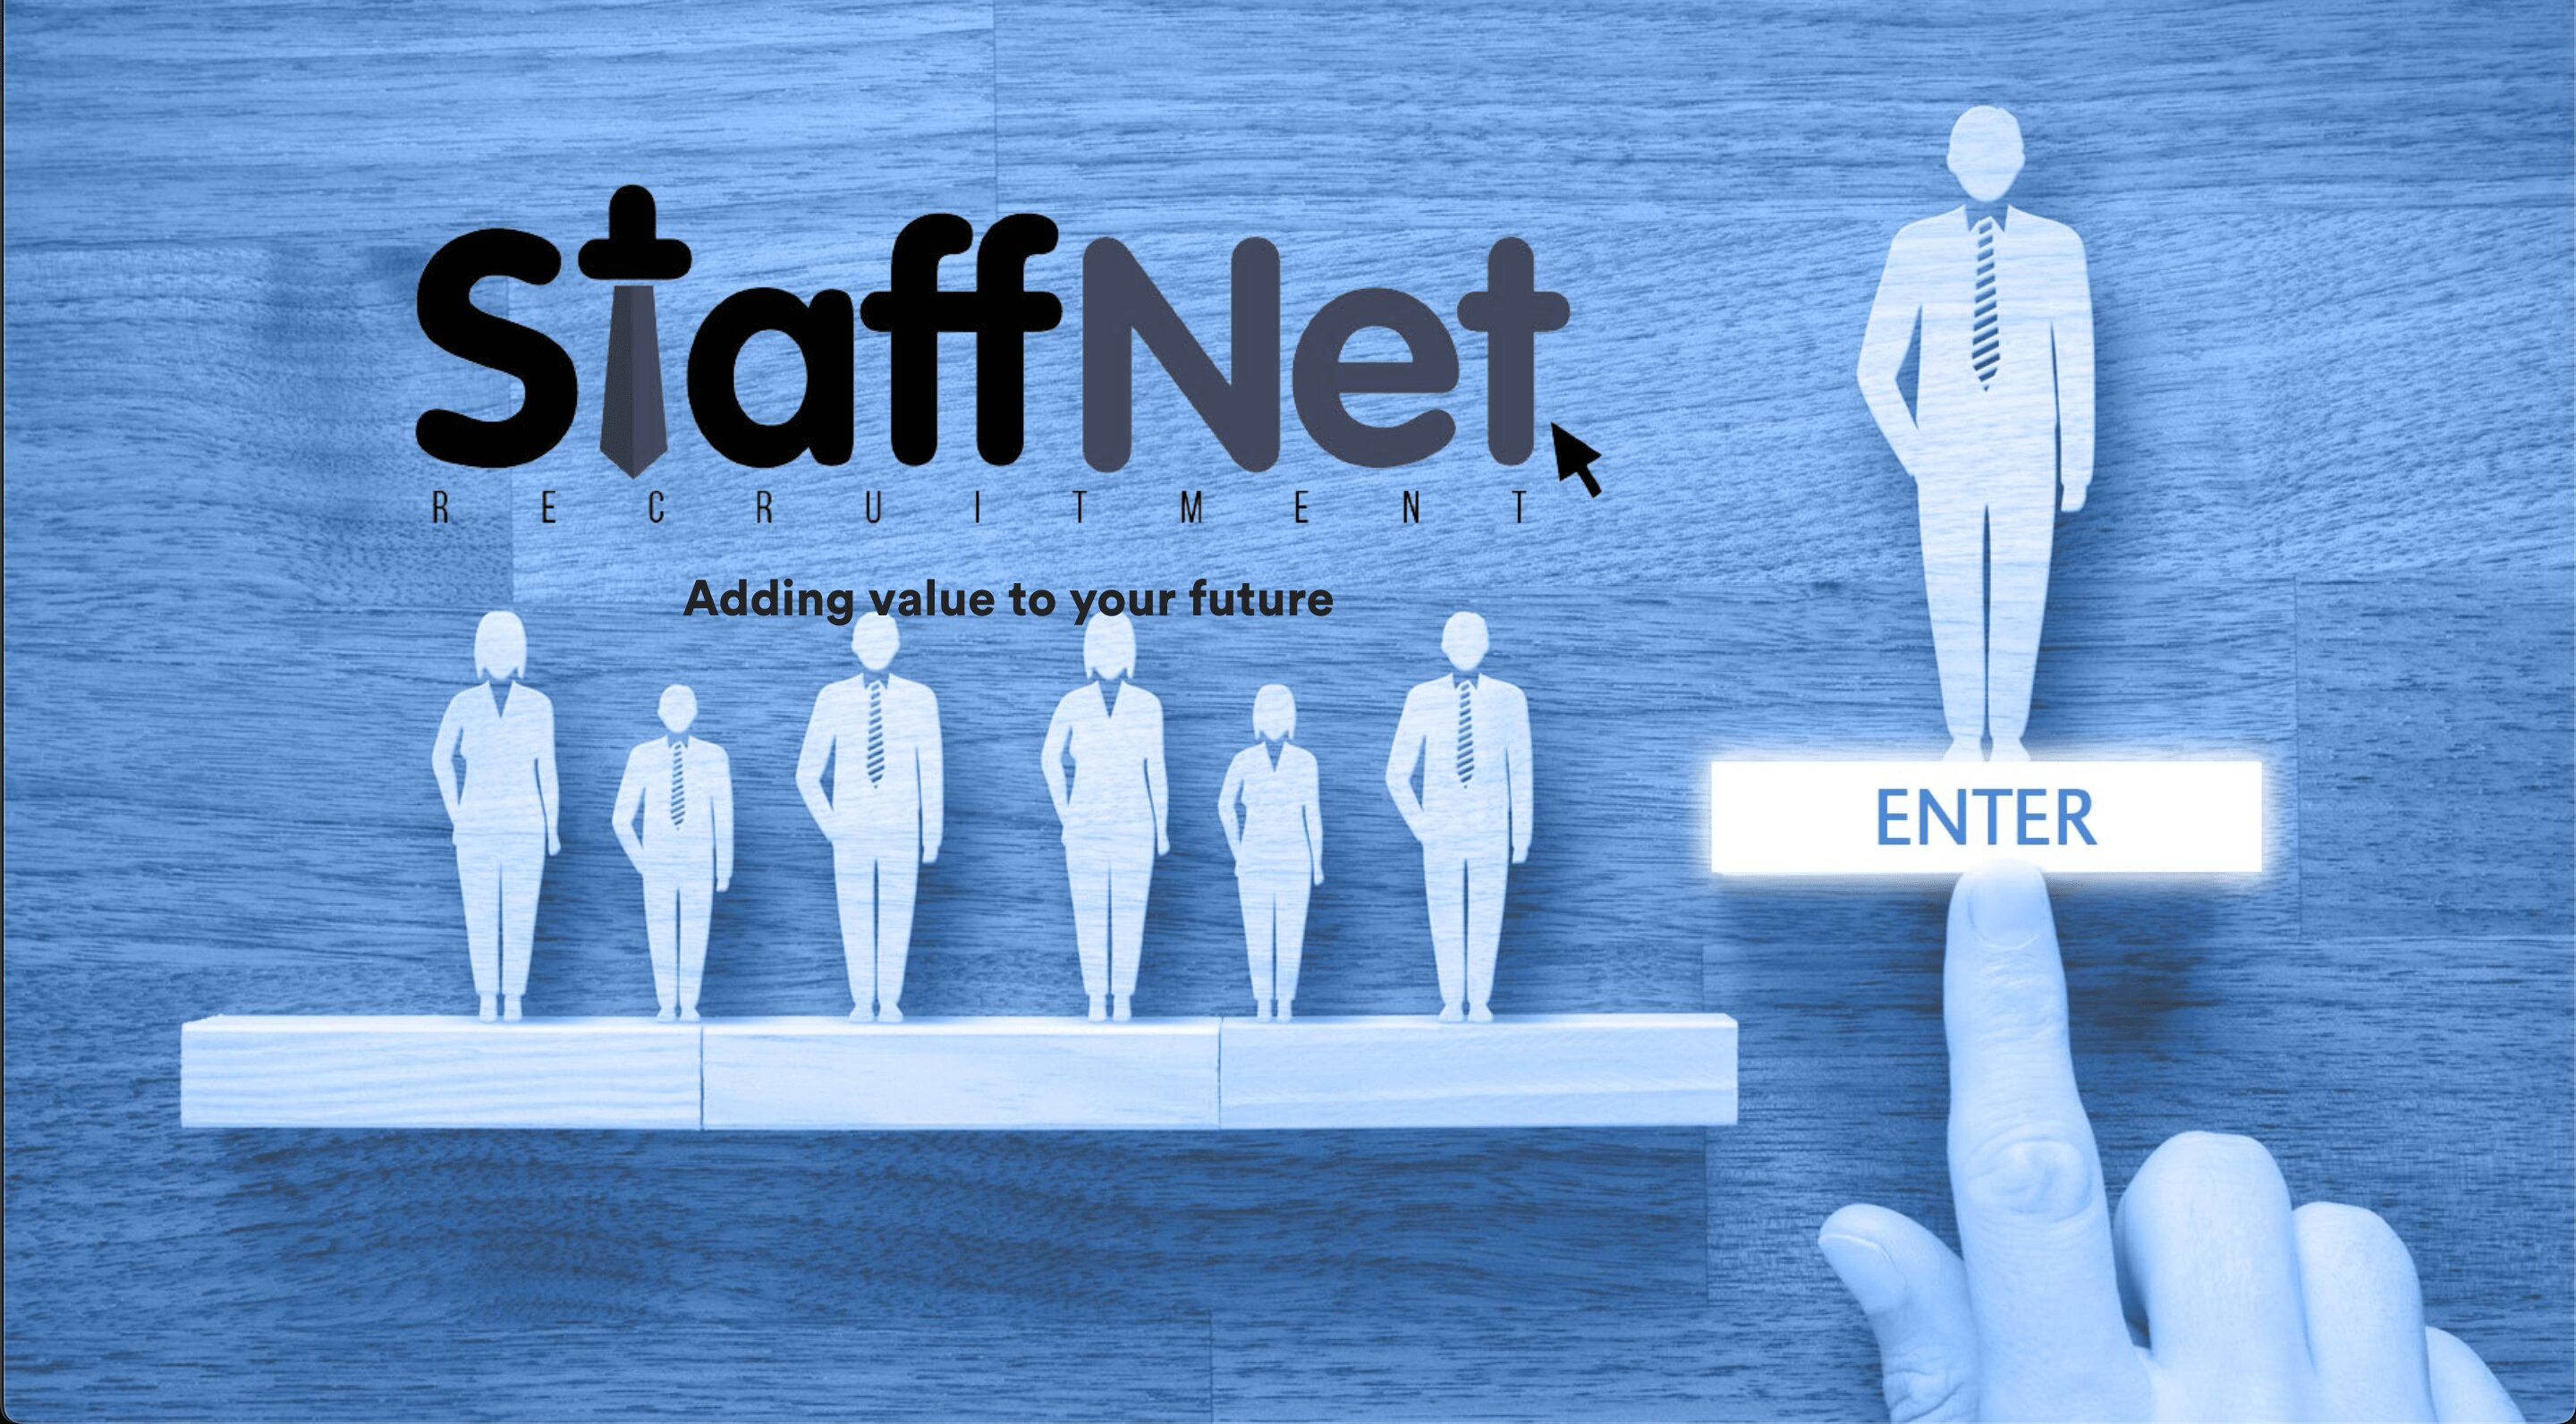 Staffnet new homepage